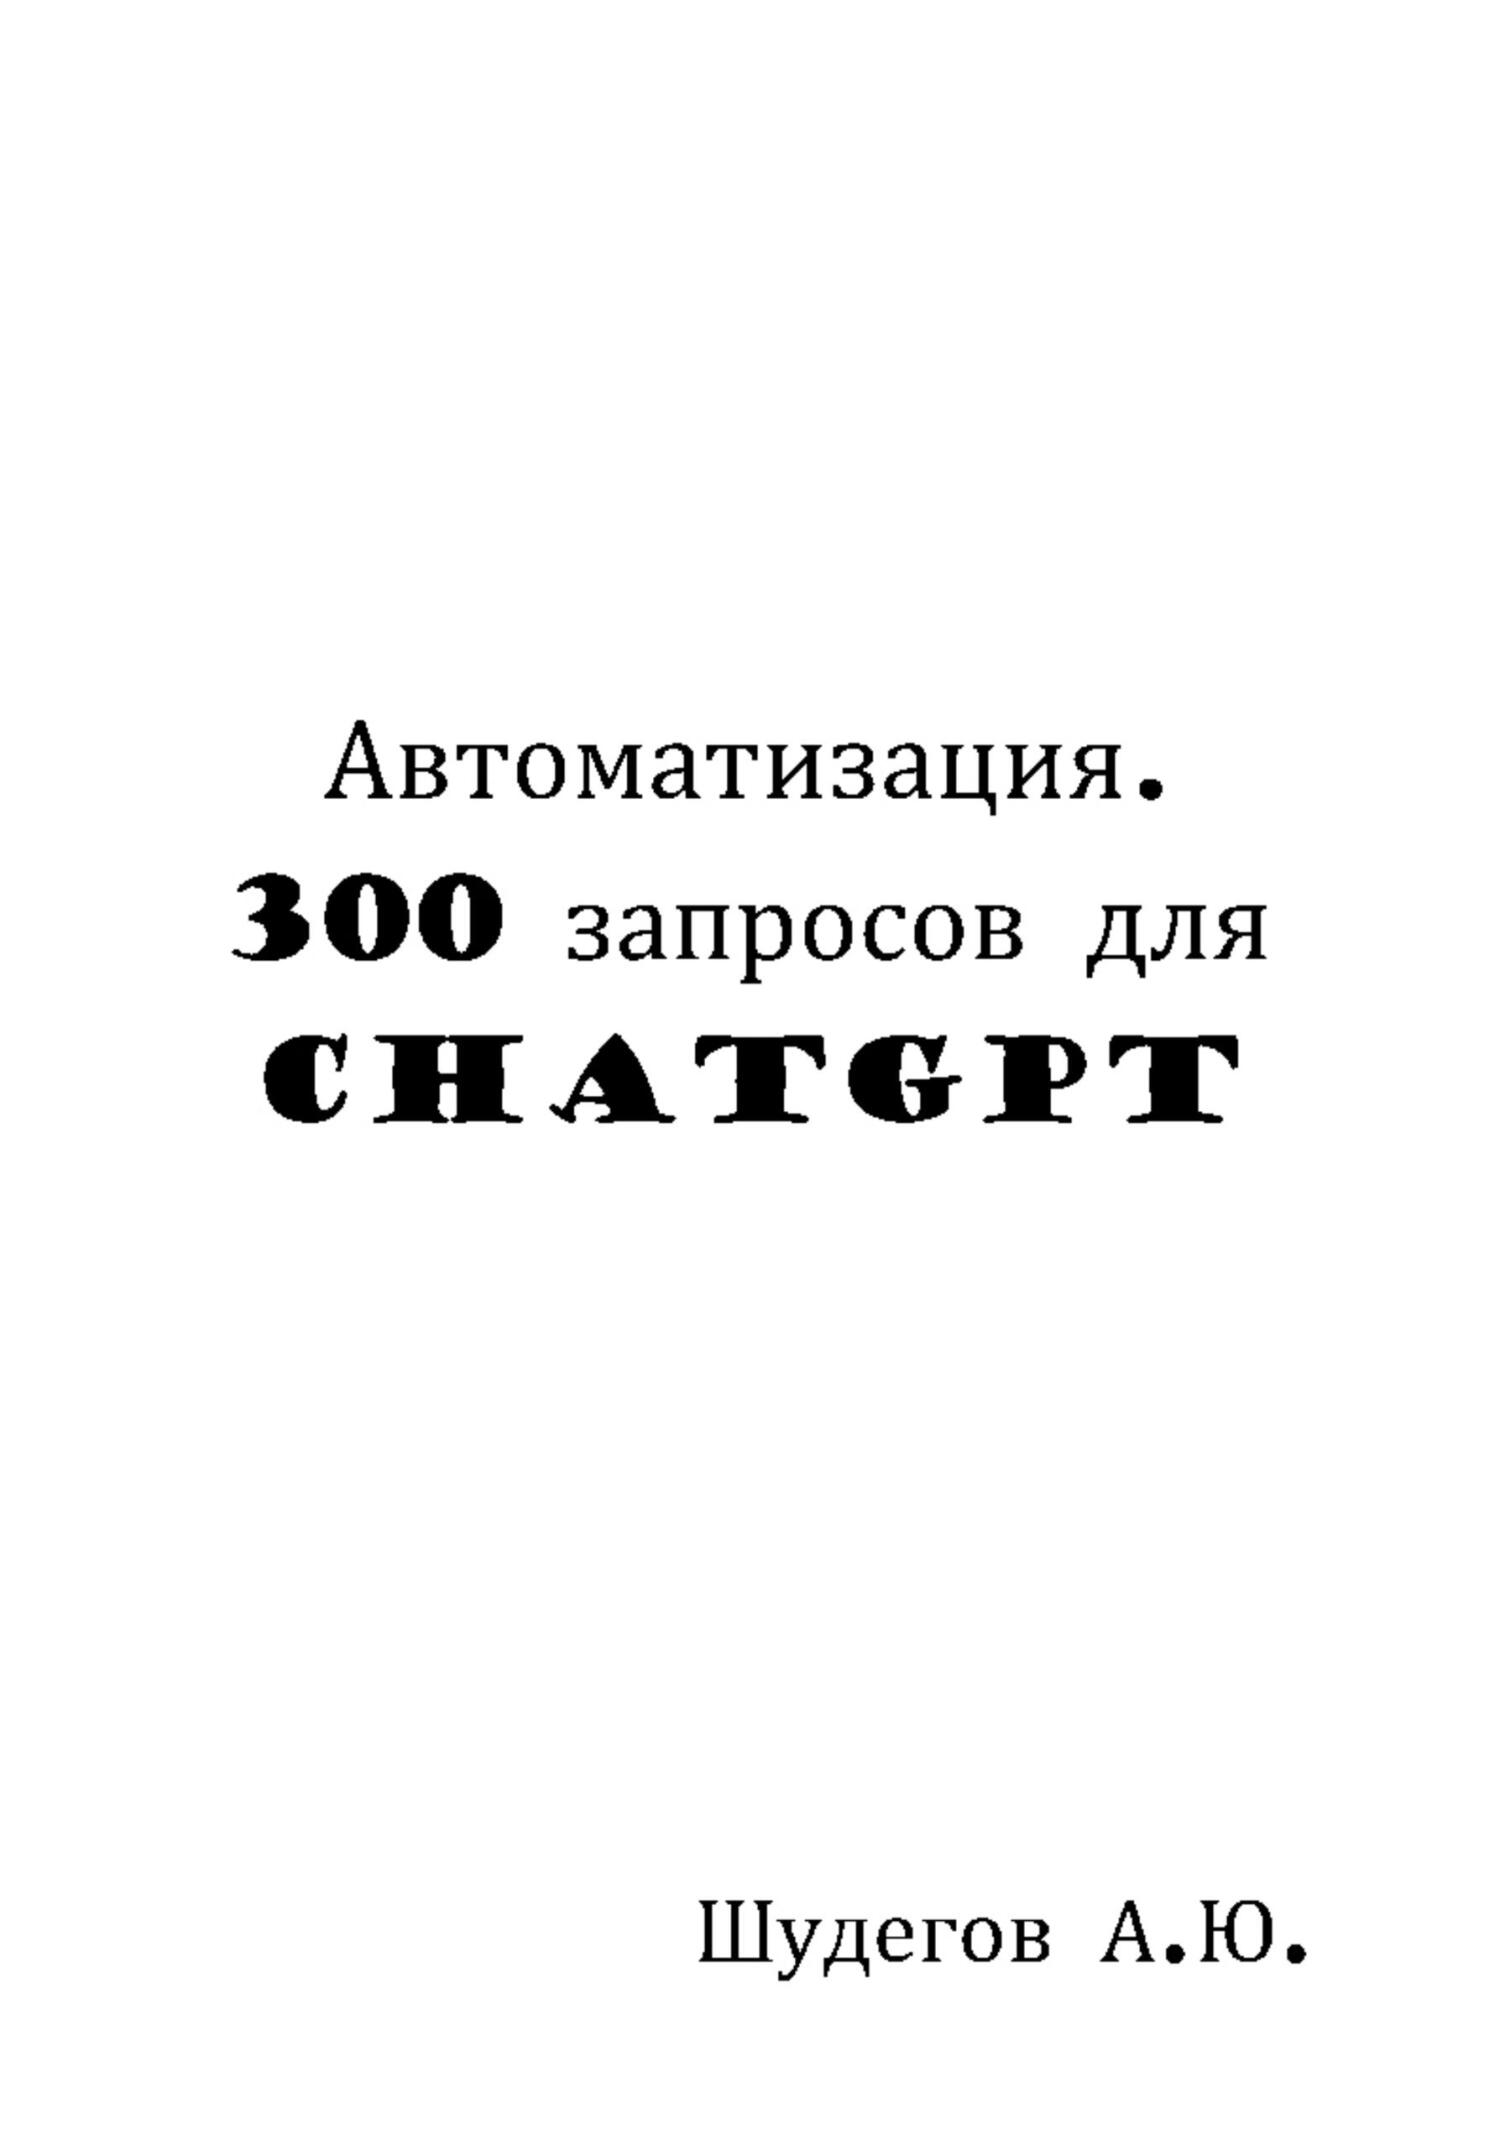 Автоматизация. 300 запросов для ChatGPT - А. Ю. Шудегов